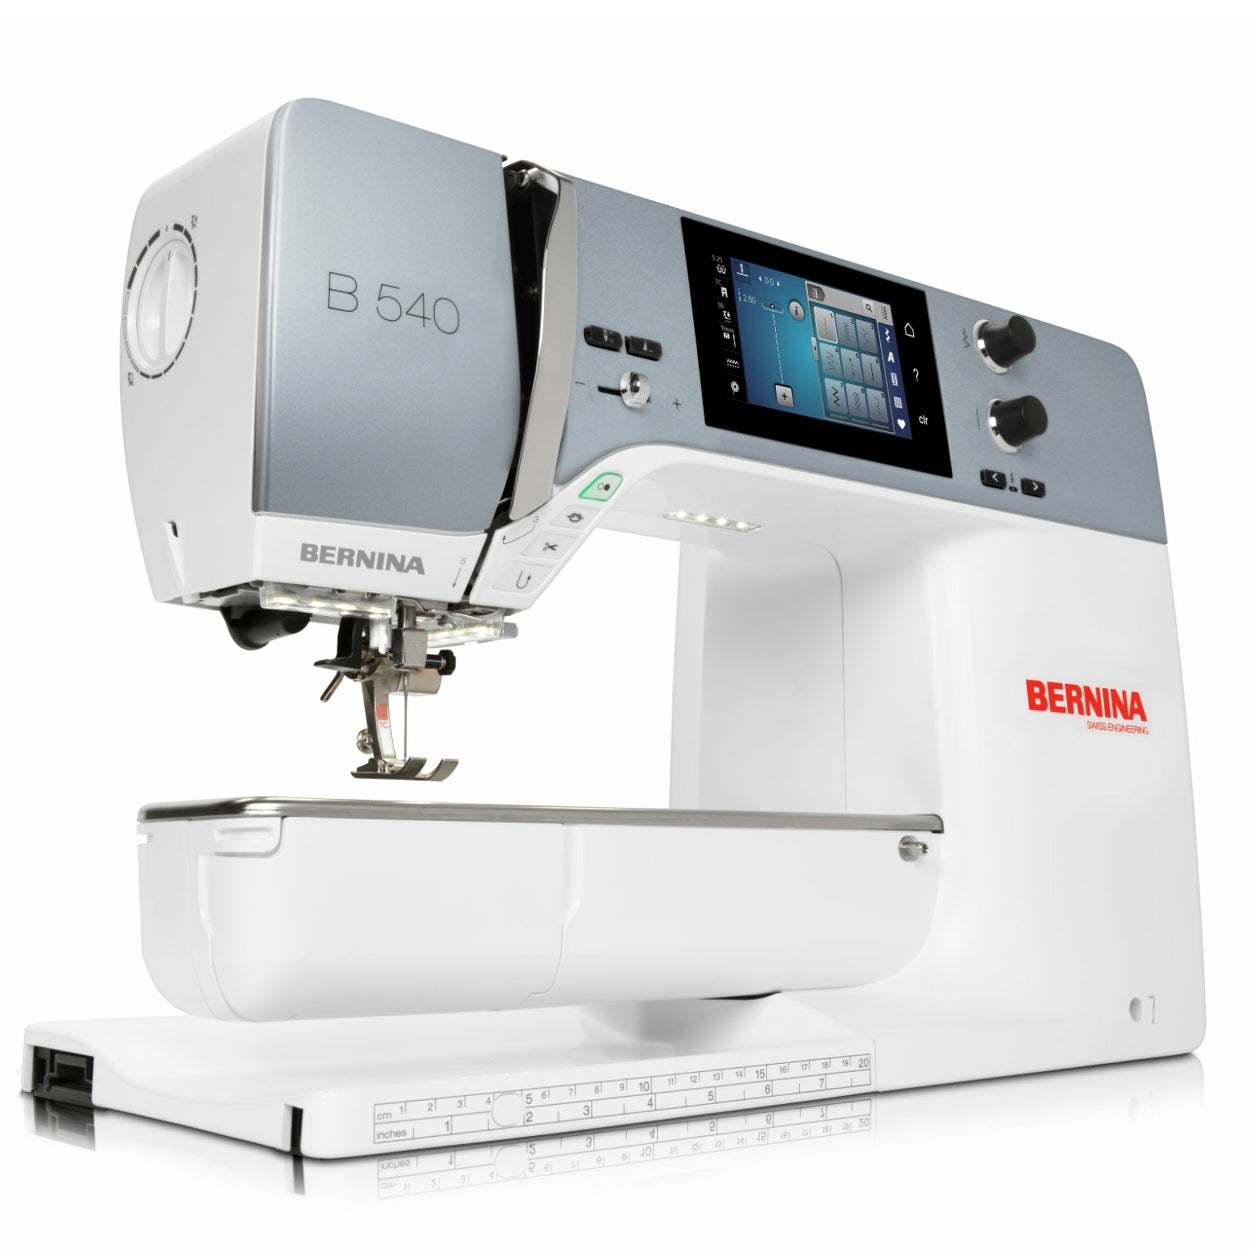 Bernina 540 sewing machine - save £400 ! from Jaycotts Sewing Supplies